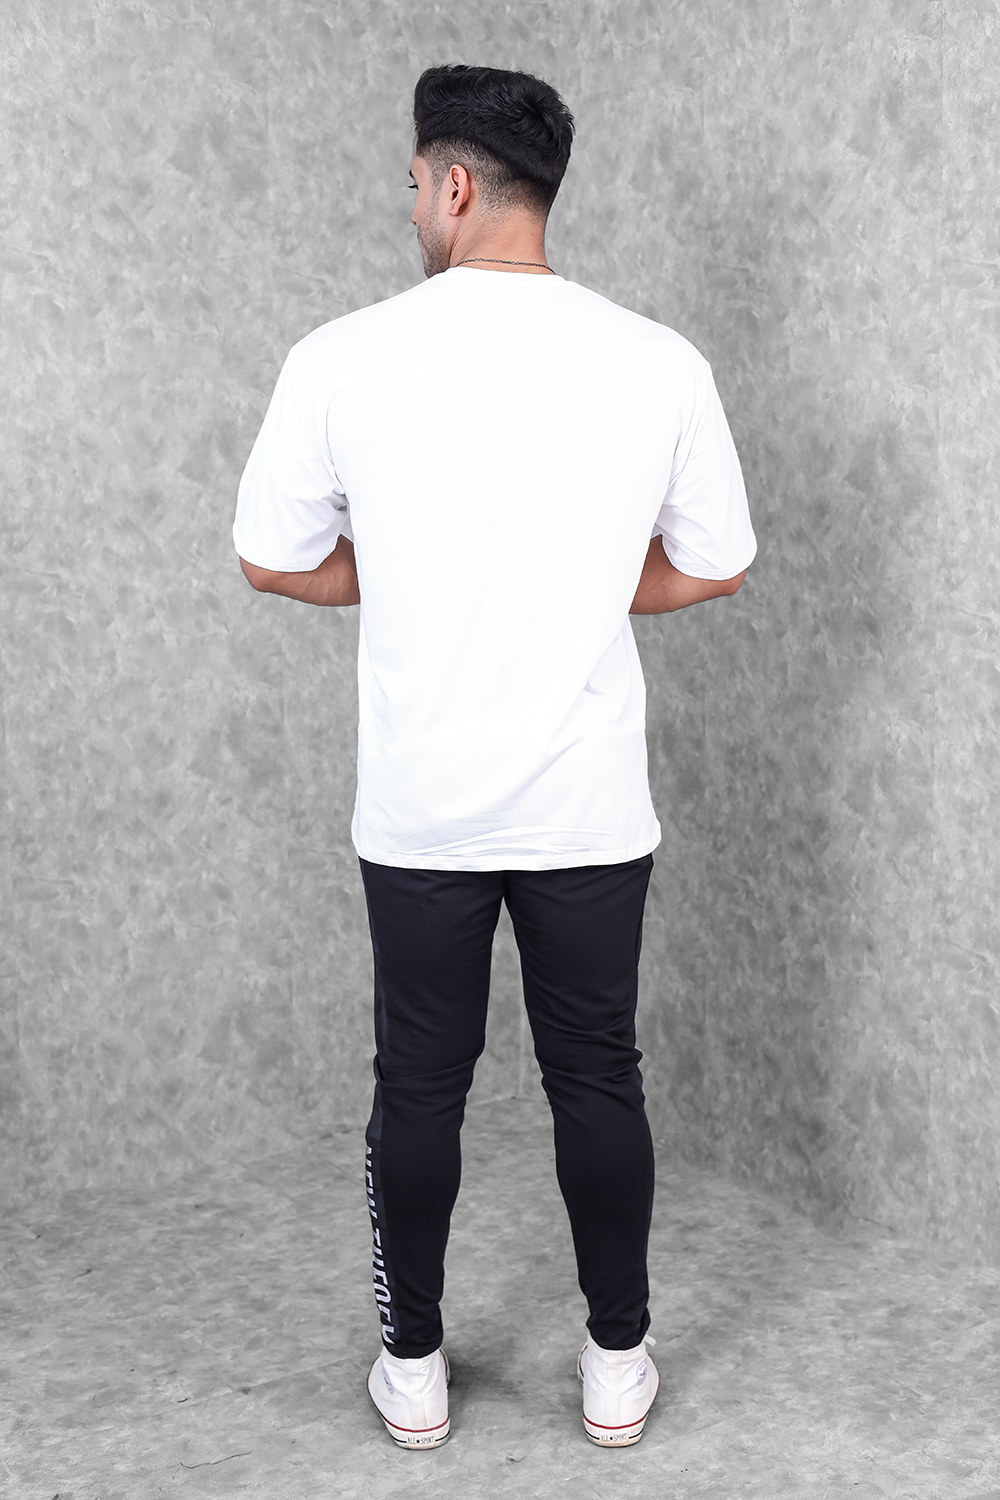 light gray | Mens shirt dress, Formal shirts for men, Shirt outfit men